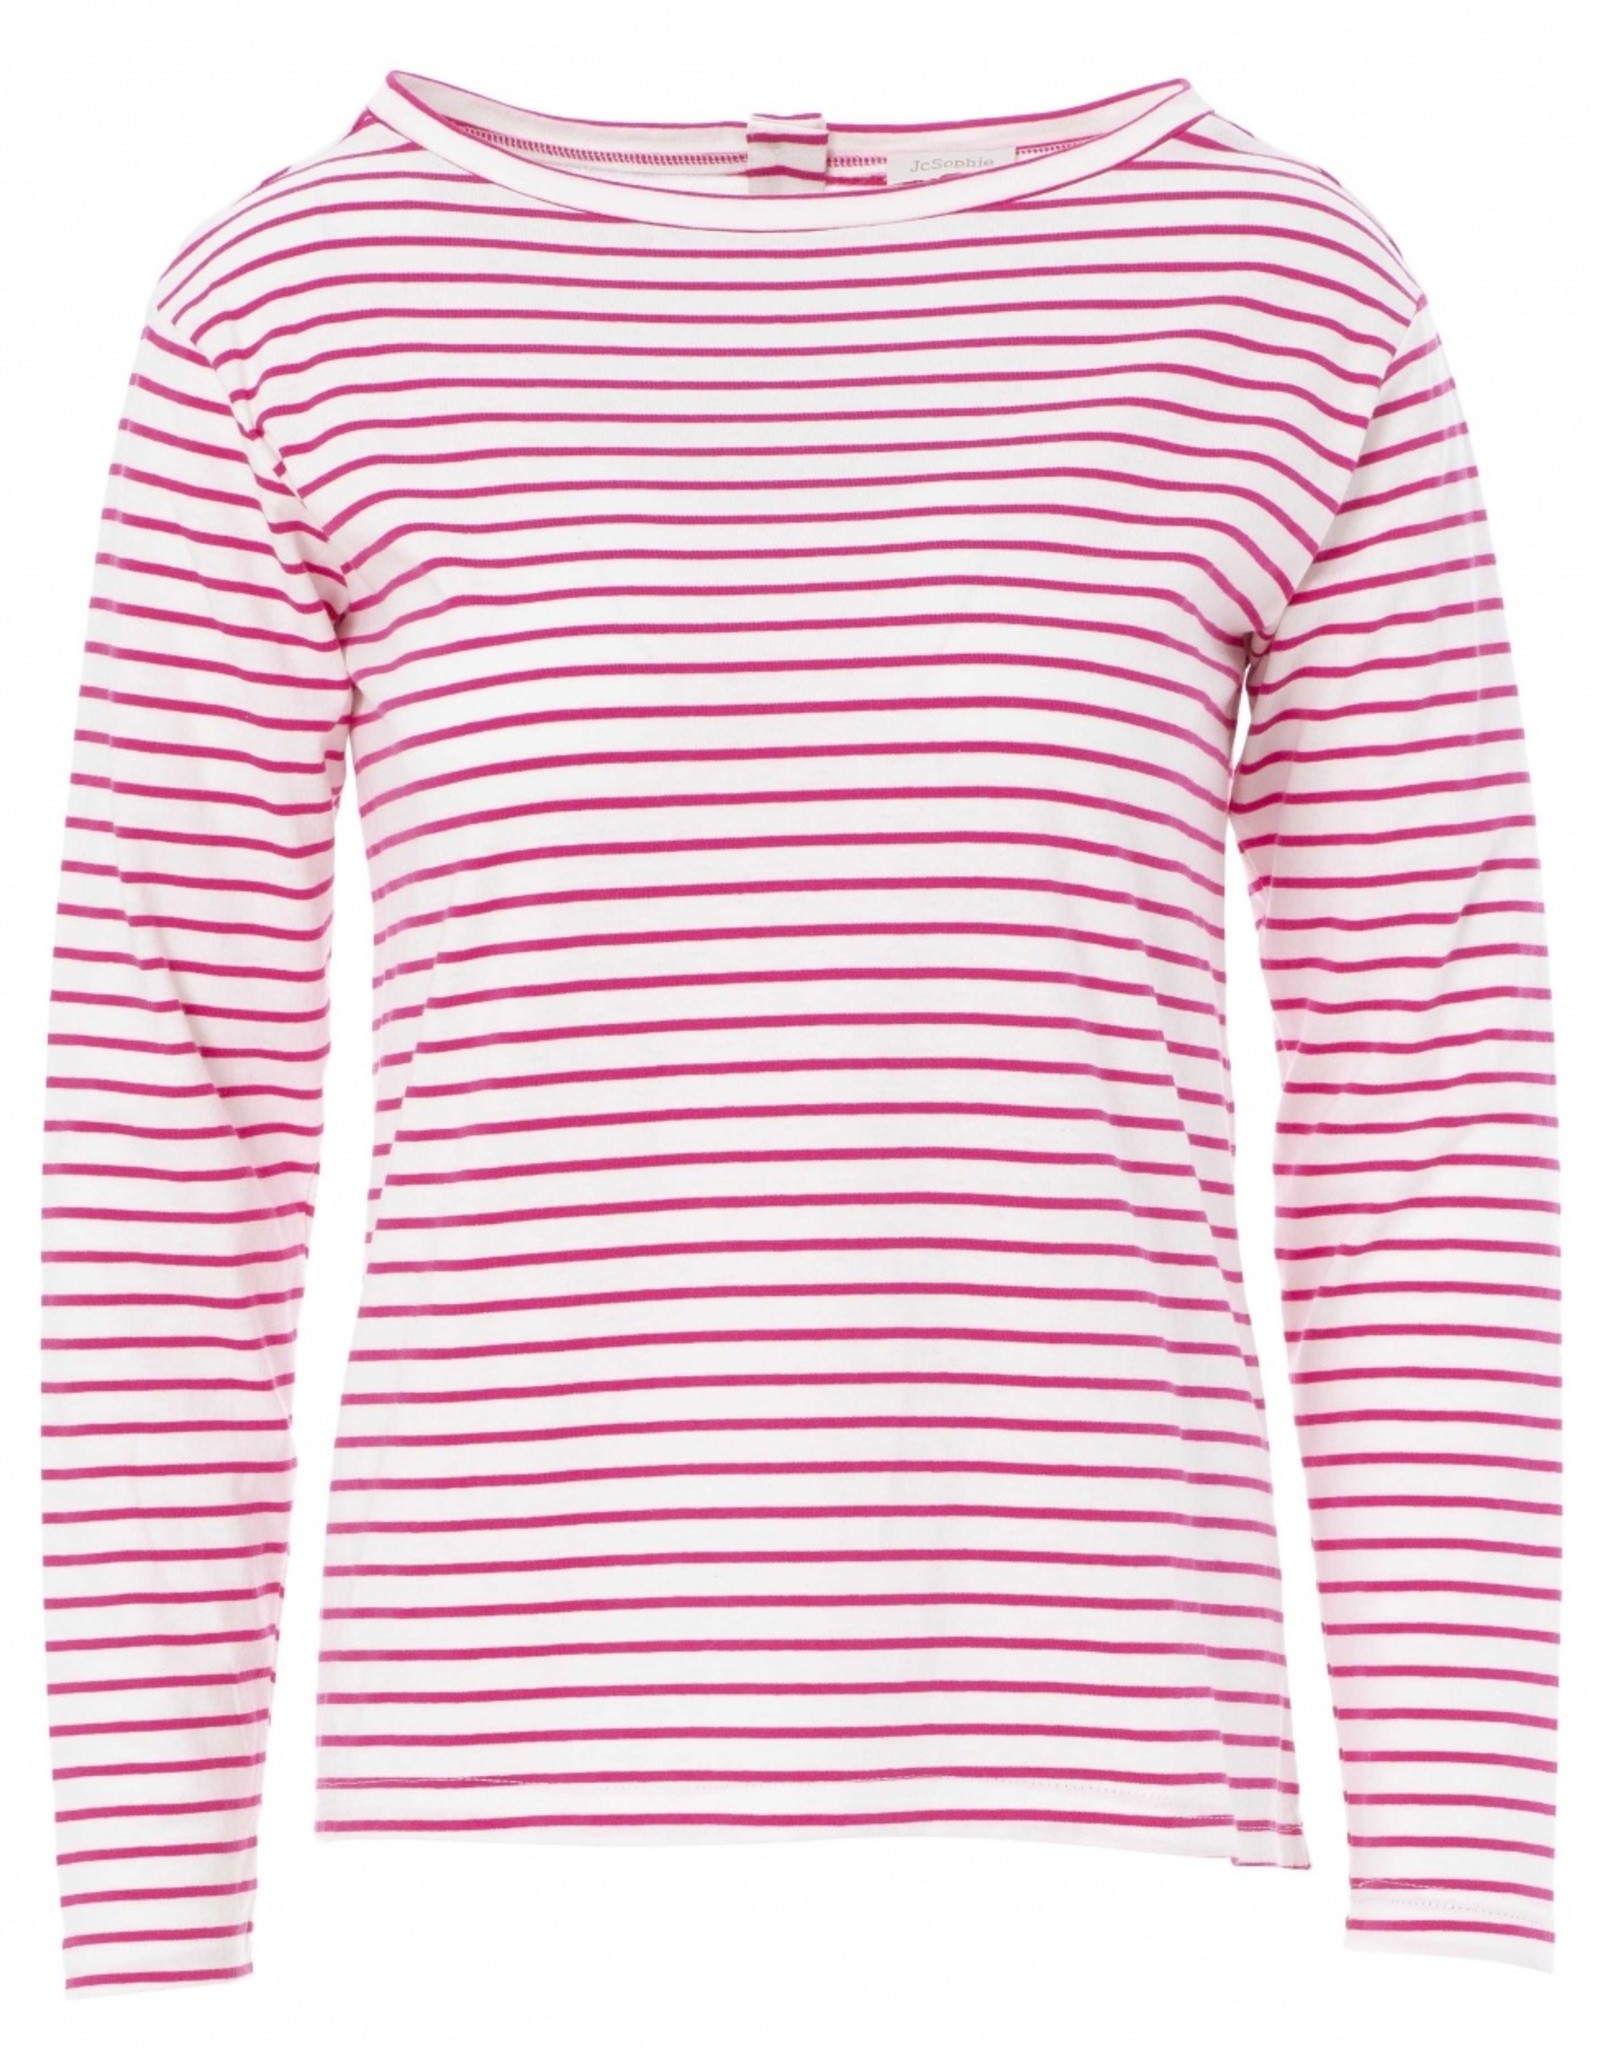 JcSophie Toledo T Shirt Pink Stripes